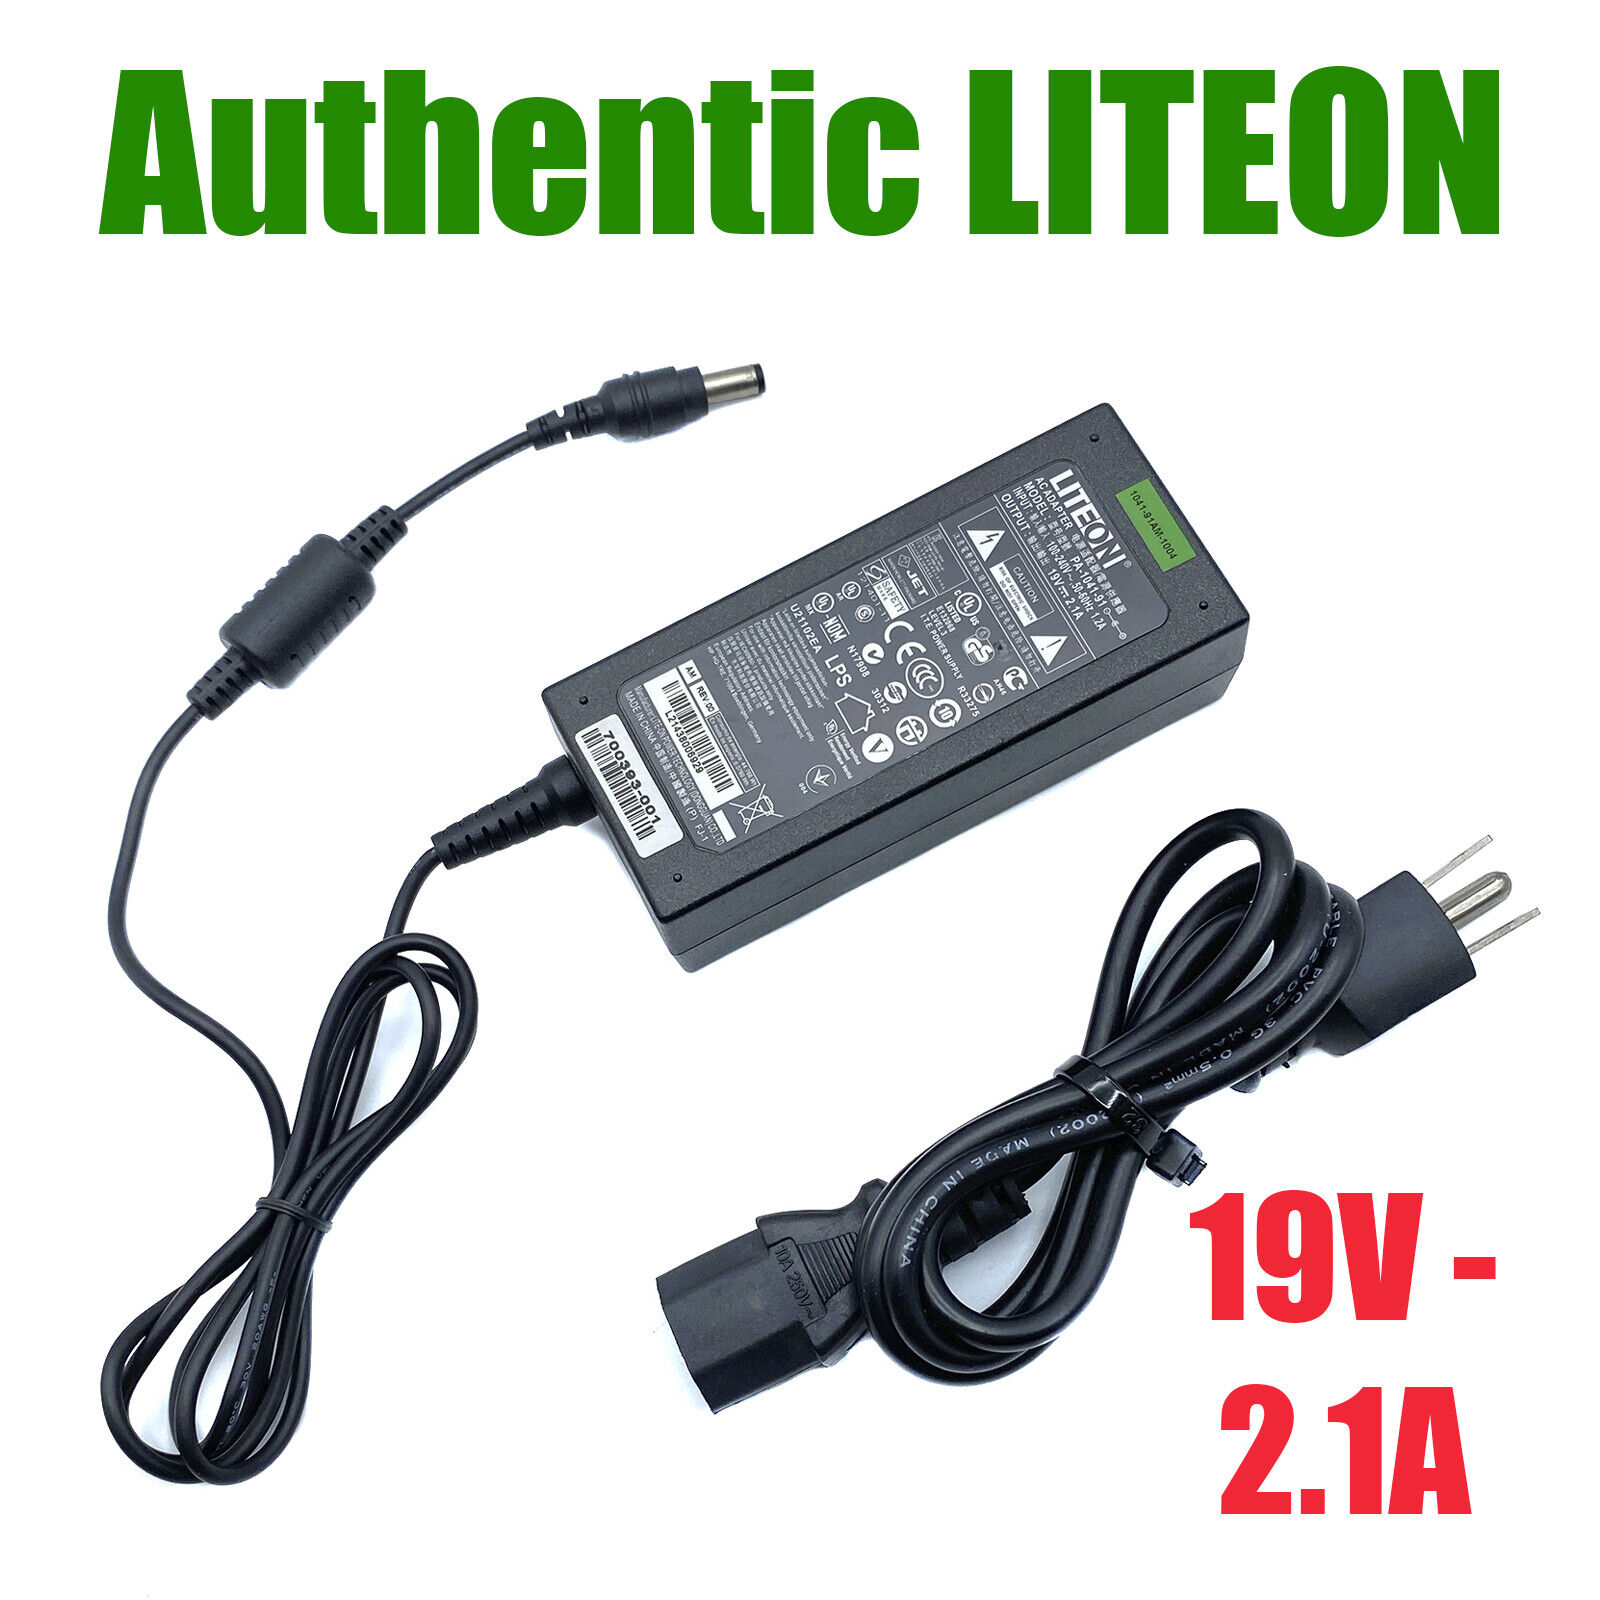 Genuine Liteon AC Adapter for HP Pavilion 27 27xw 27xi 27er 23es 27es 25 Monitor